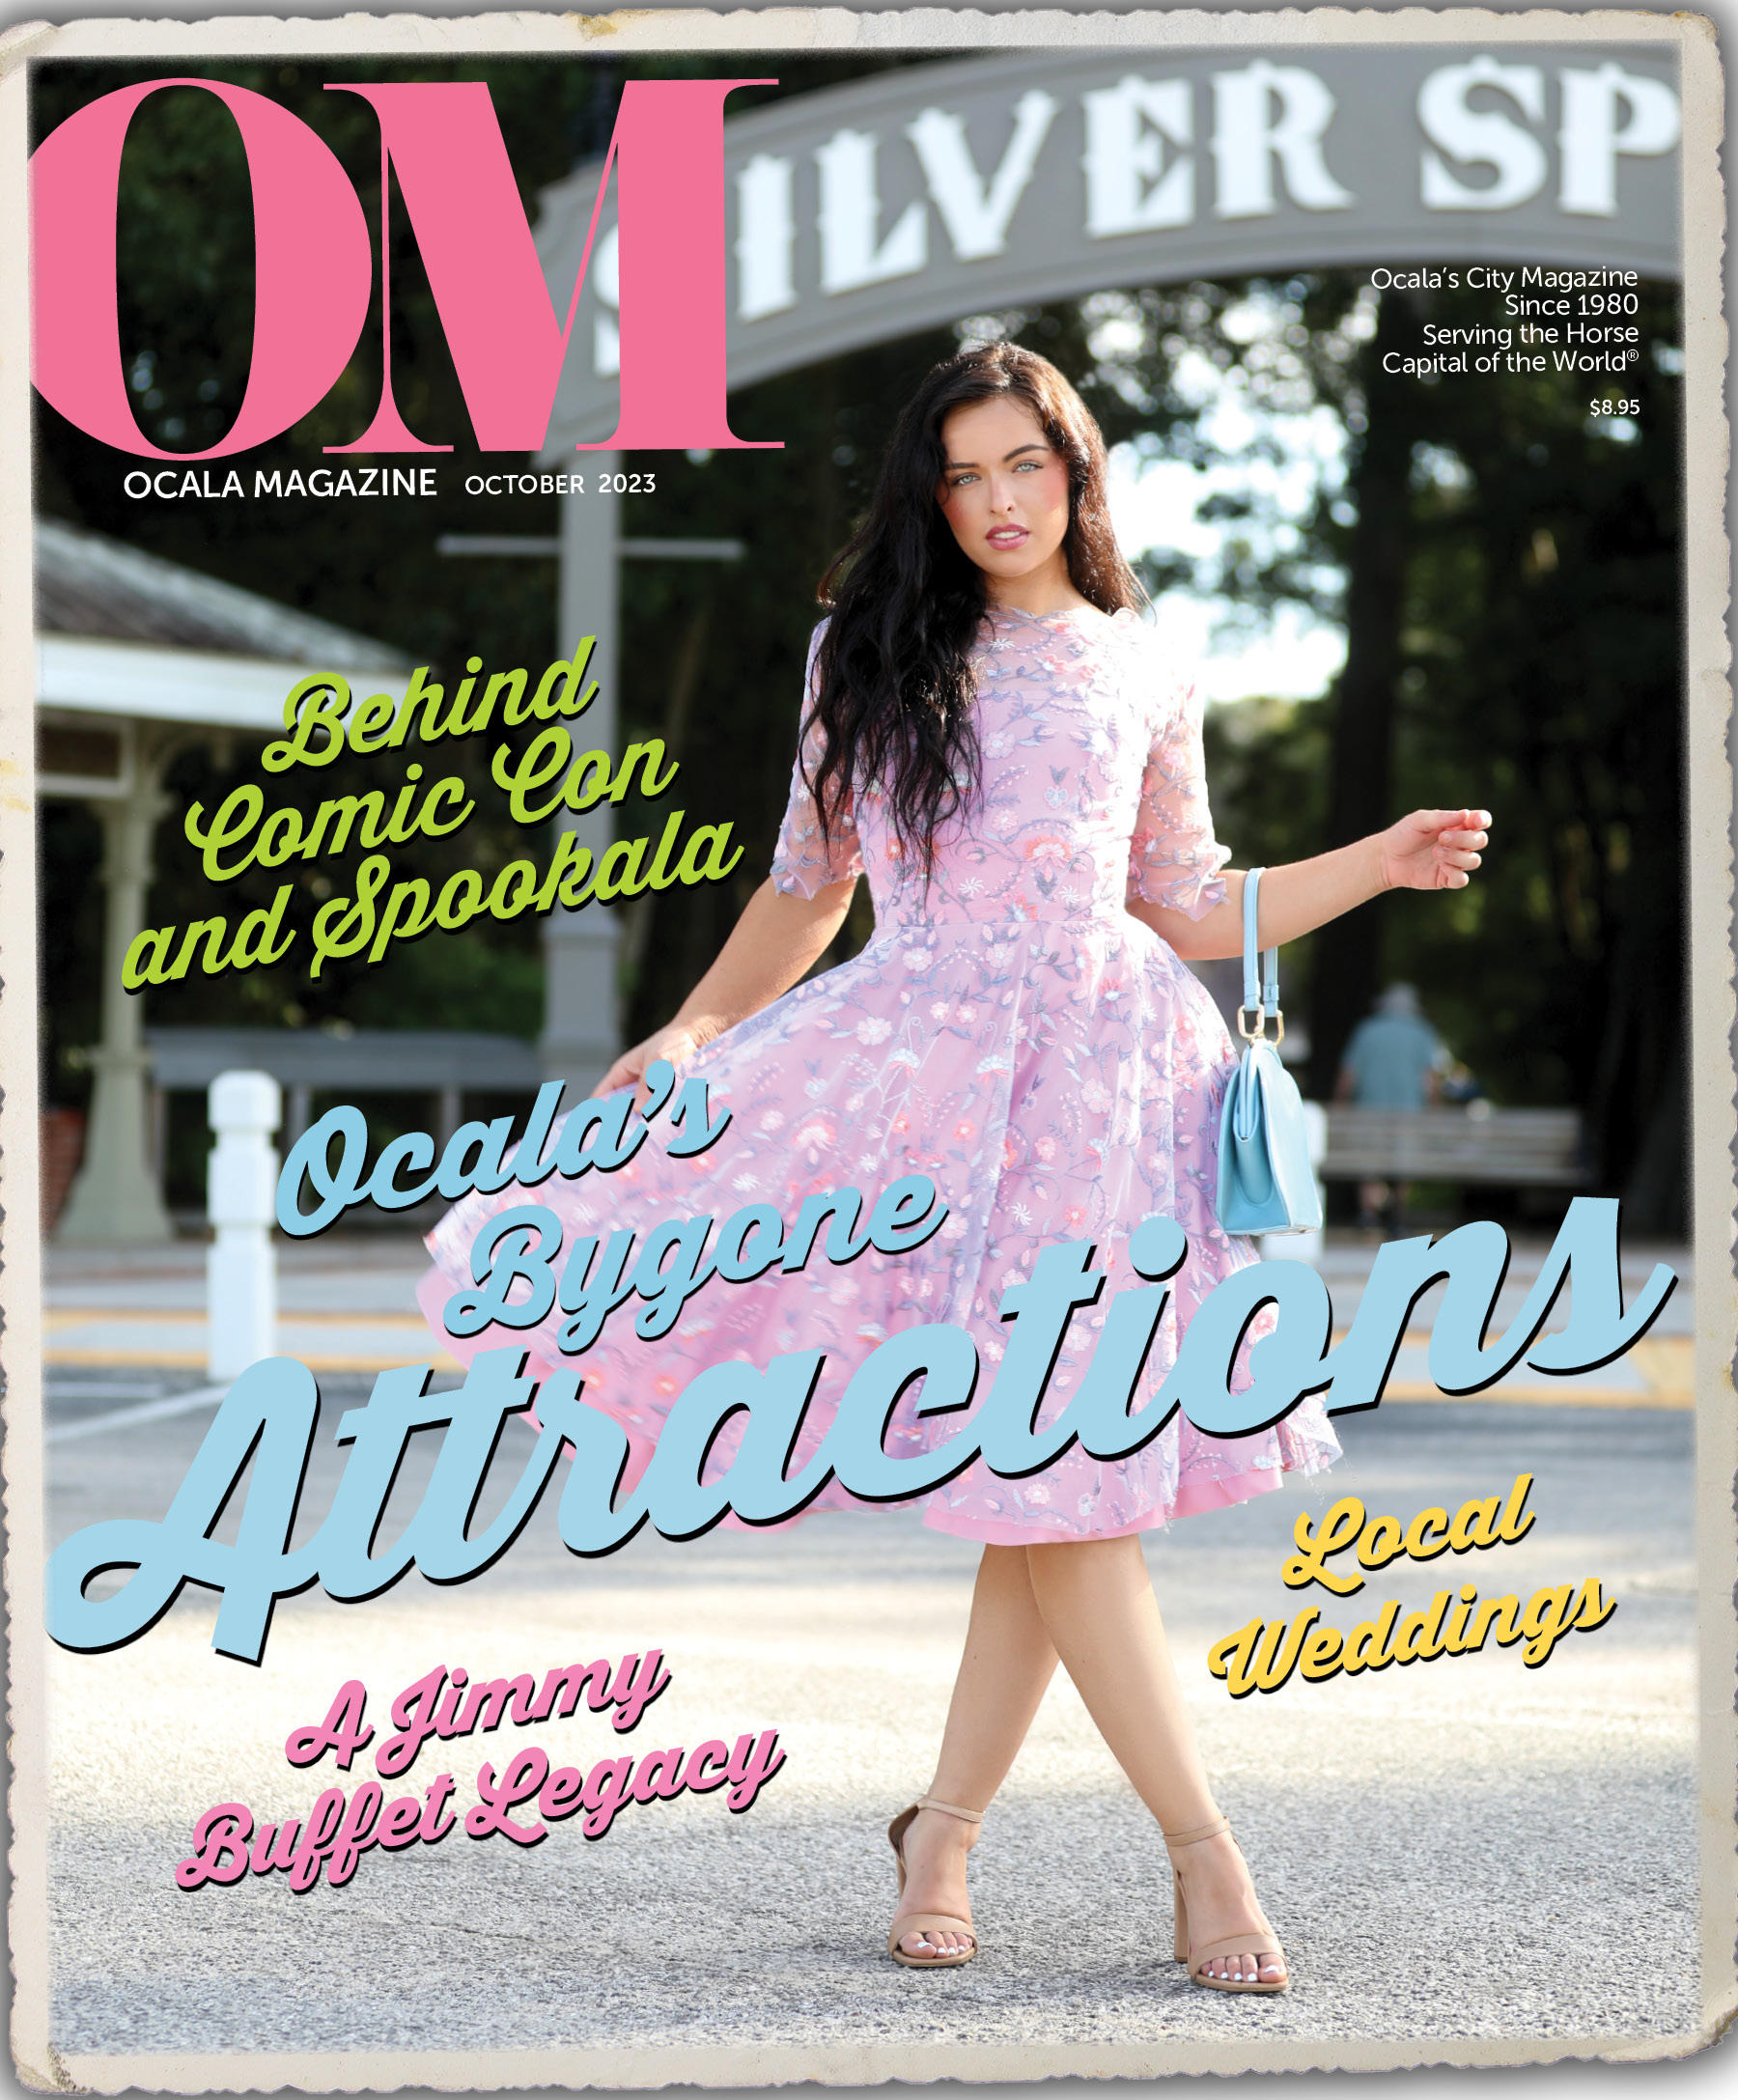 Ocala Magazine October 2023 cover